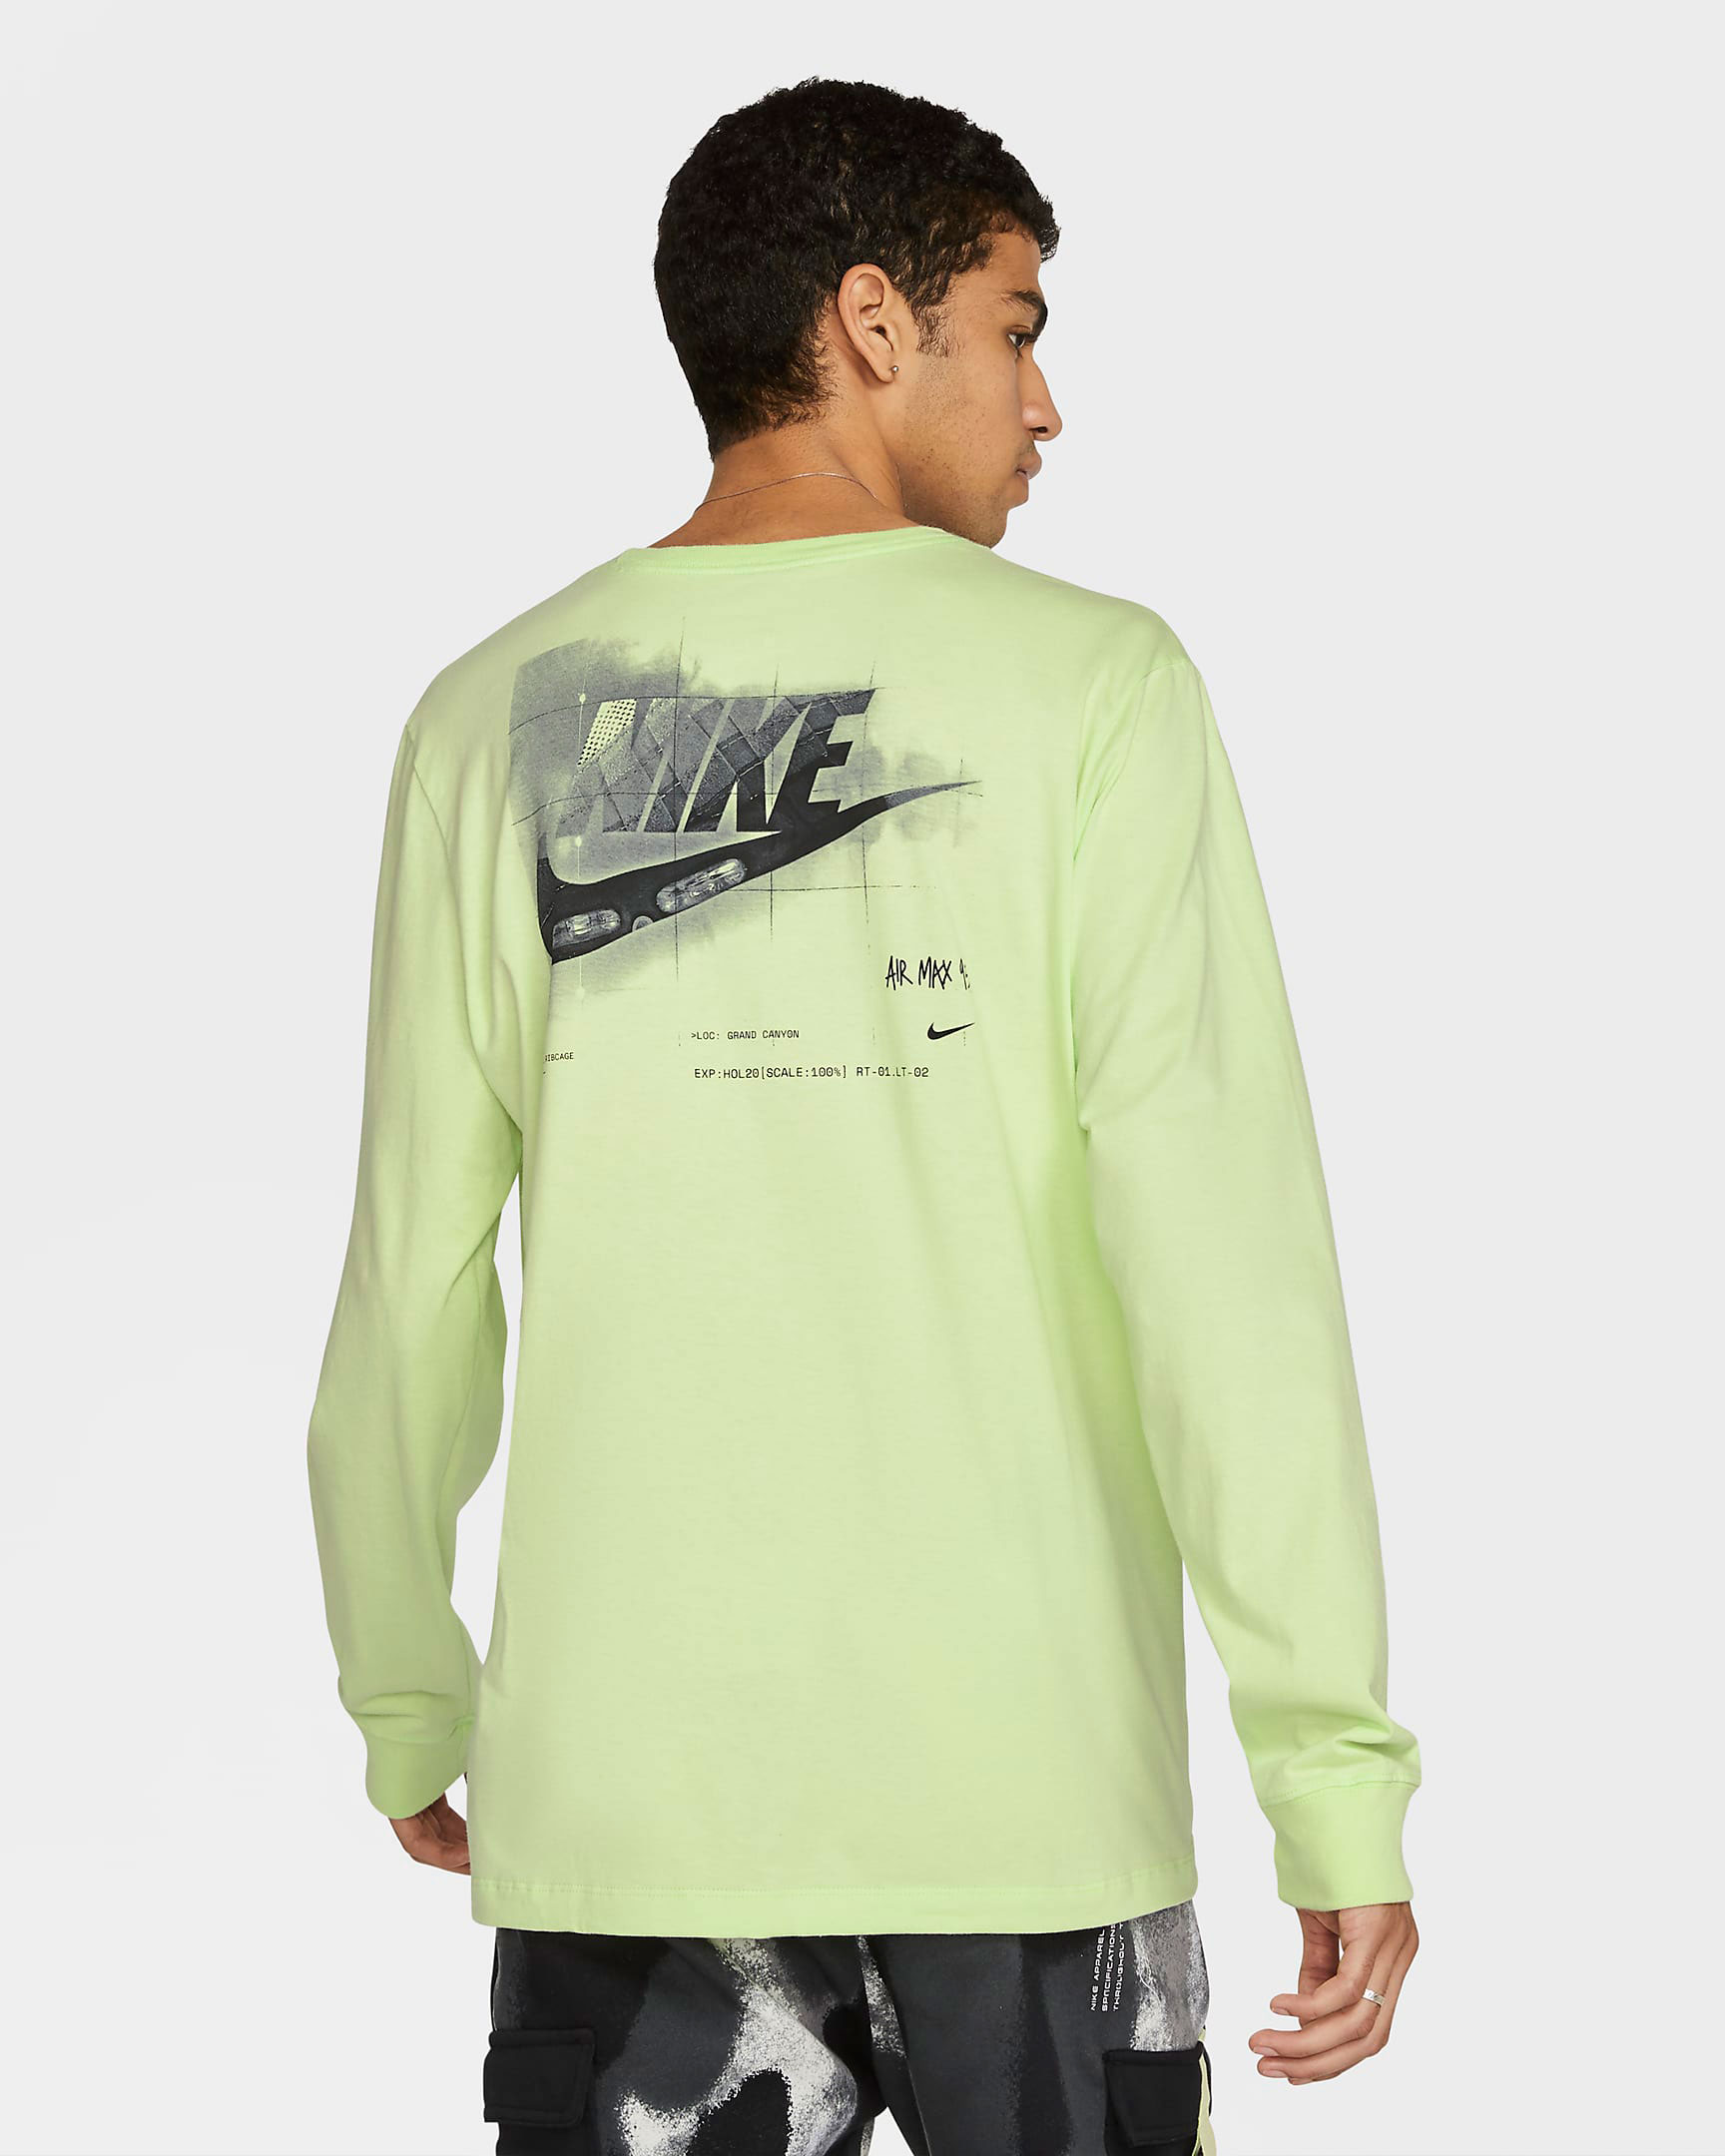 nike-air-max-95-neon-2020-long-sleeve-shirt-2